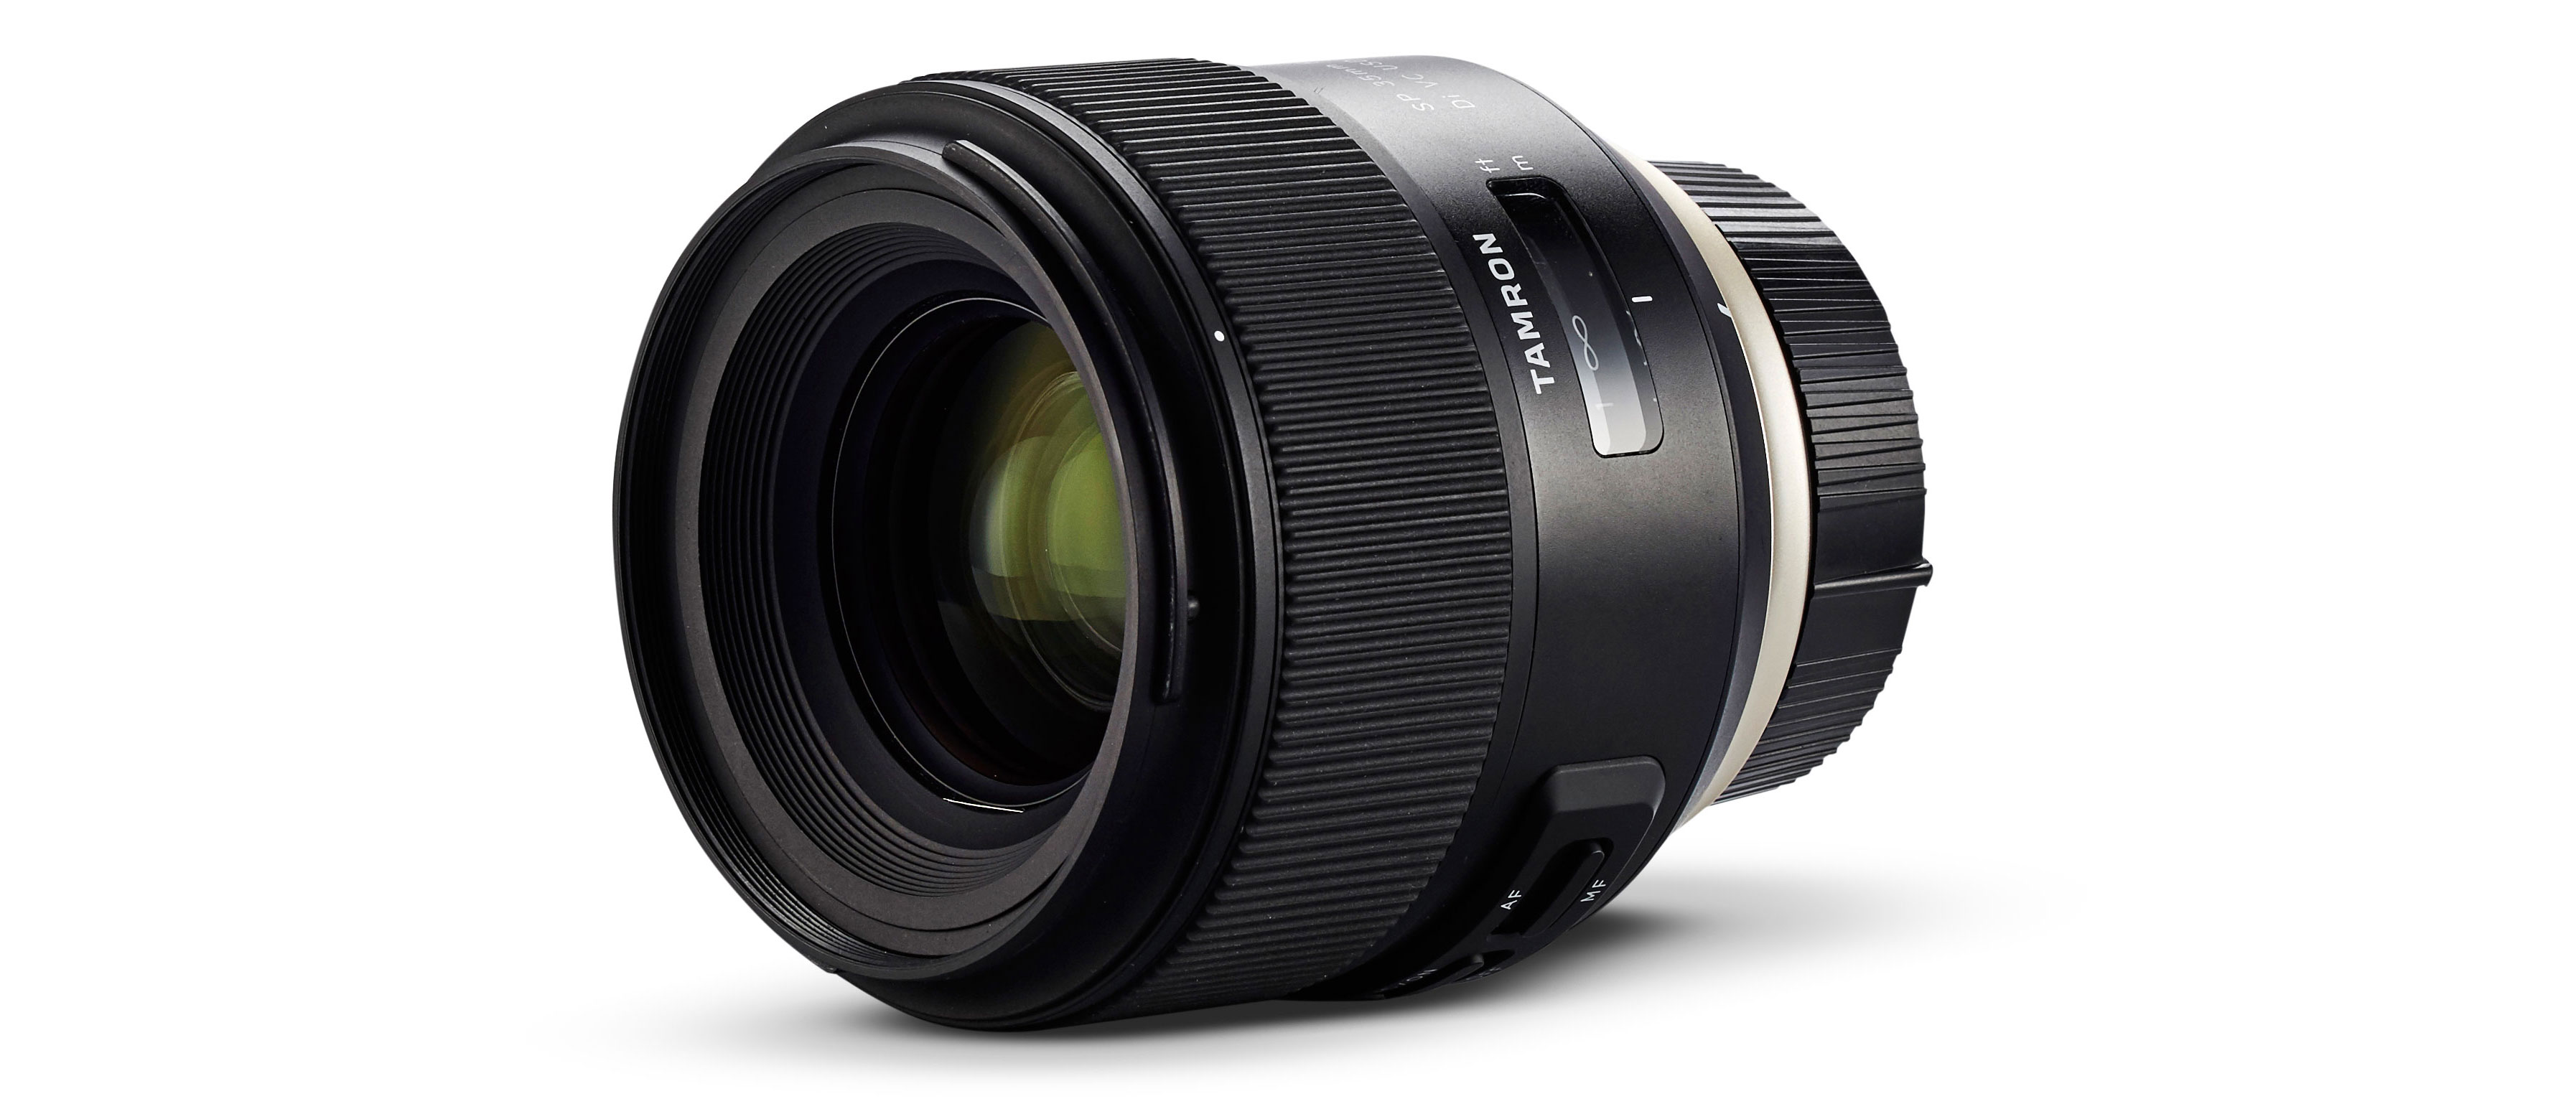 Tamron SP 35mm f/1.8 Di VC USD review | Digital Camera World